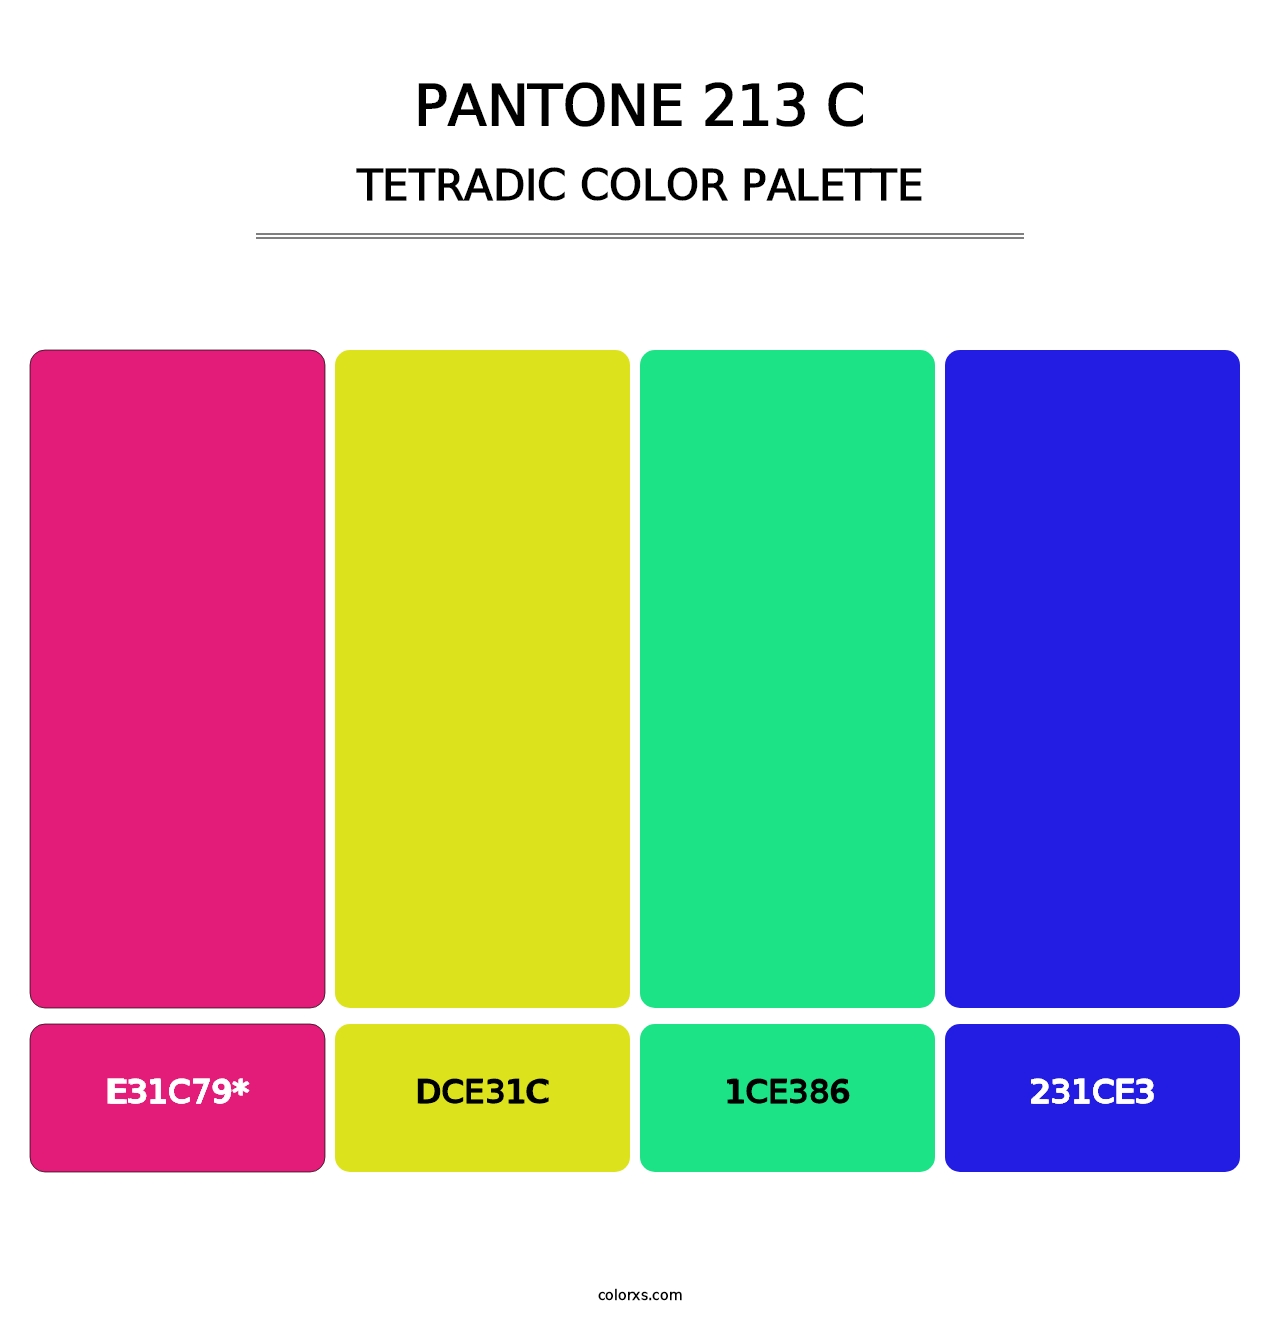 PANTONE 213 C - Tetradic Color Palette